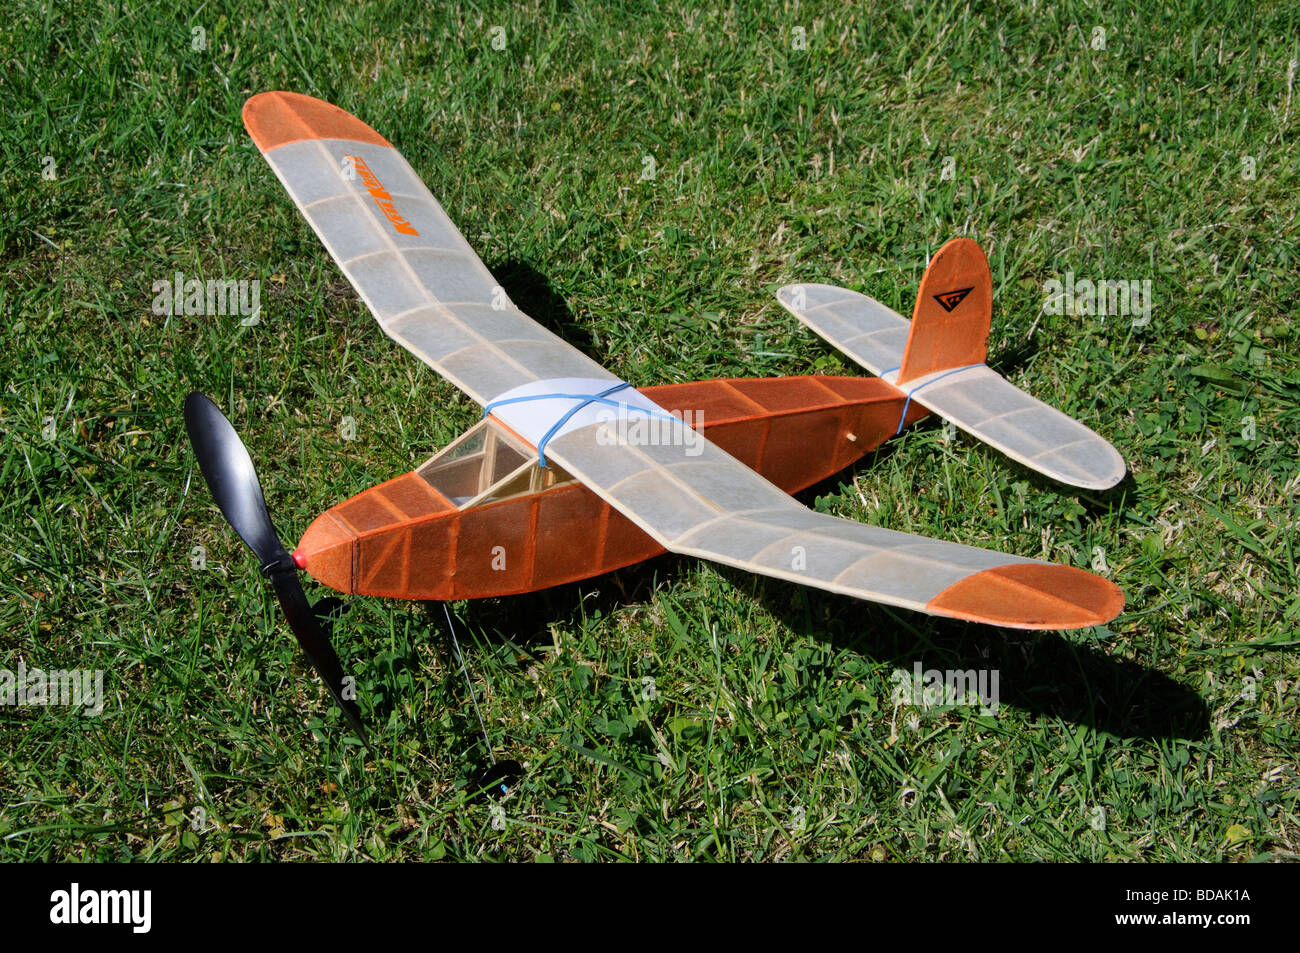 KeilKraft Achilles rubber-powered model plane Stock Photo - Alamy